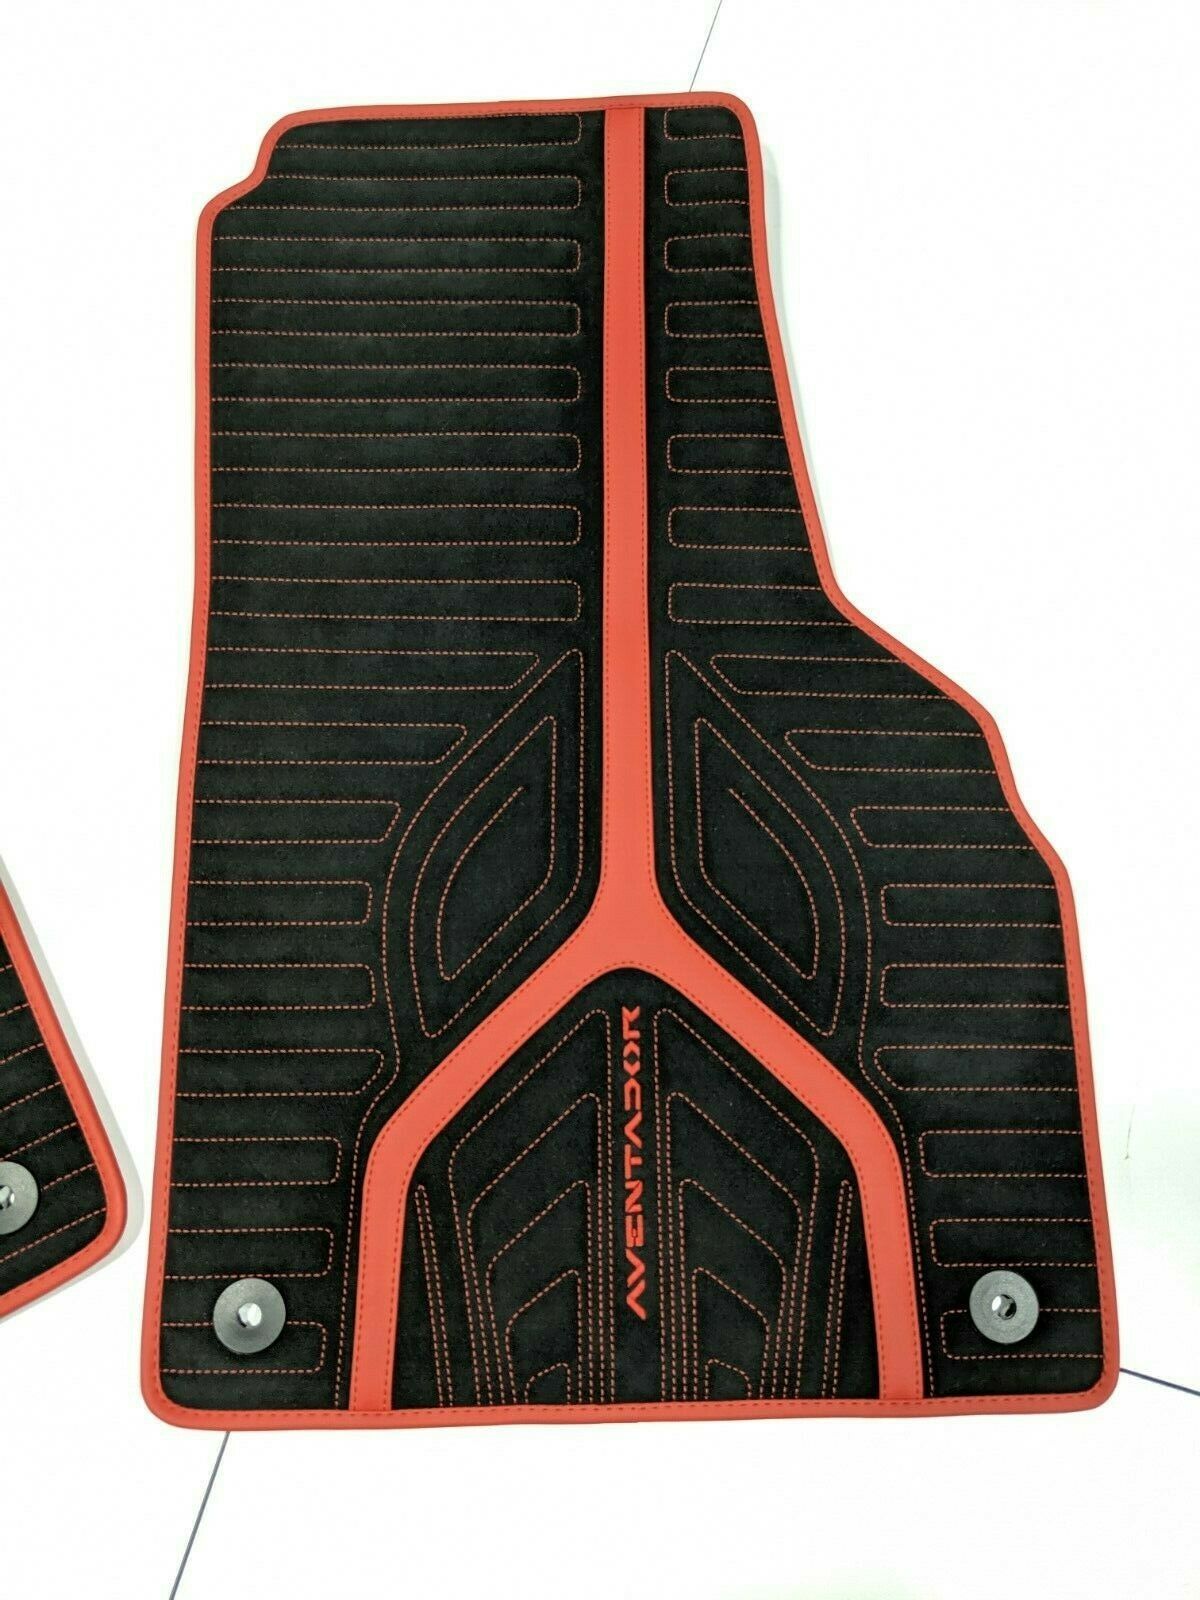 Aventador, Huracan Alcantara/Eco Leather Floor Mats Black/Red Floor Mats & Carpets